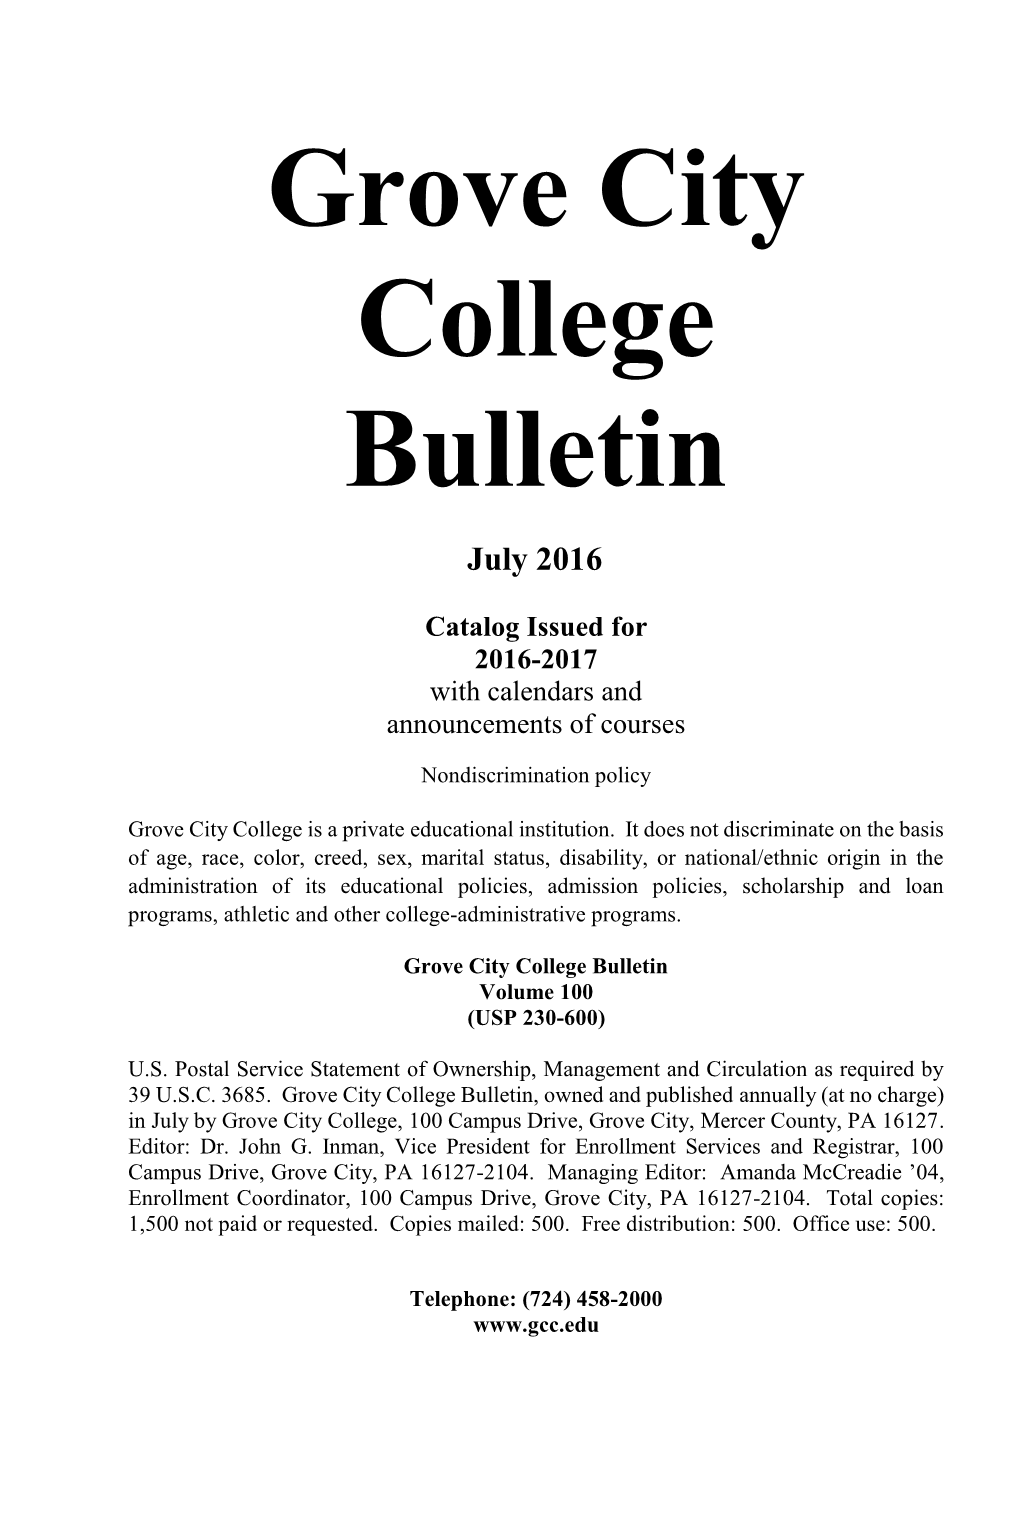 Grove City College Bulletin Volume 100 (USP 230-600)